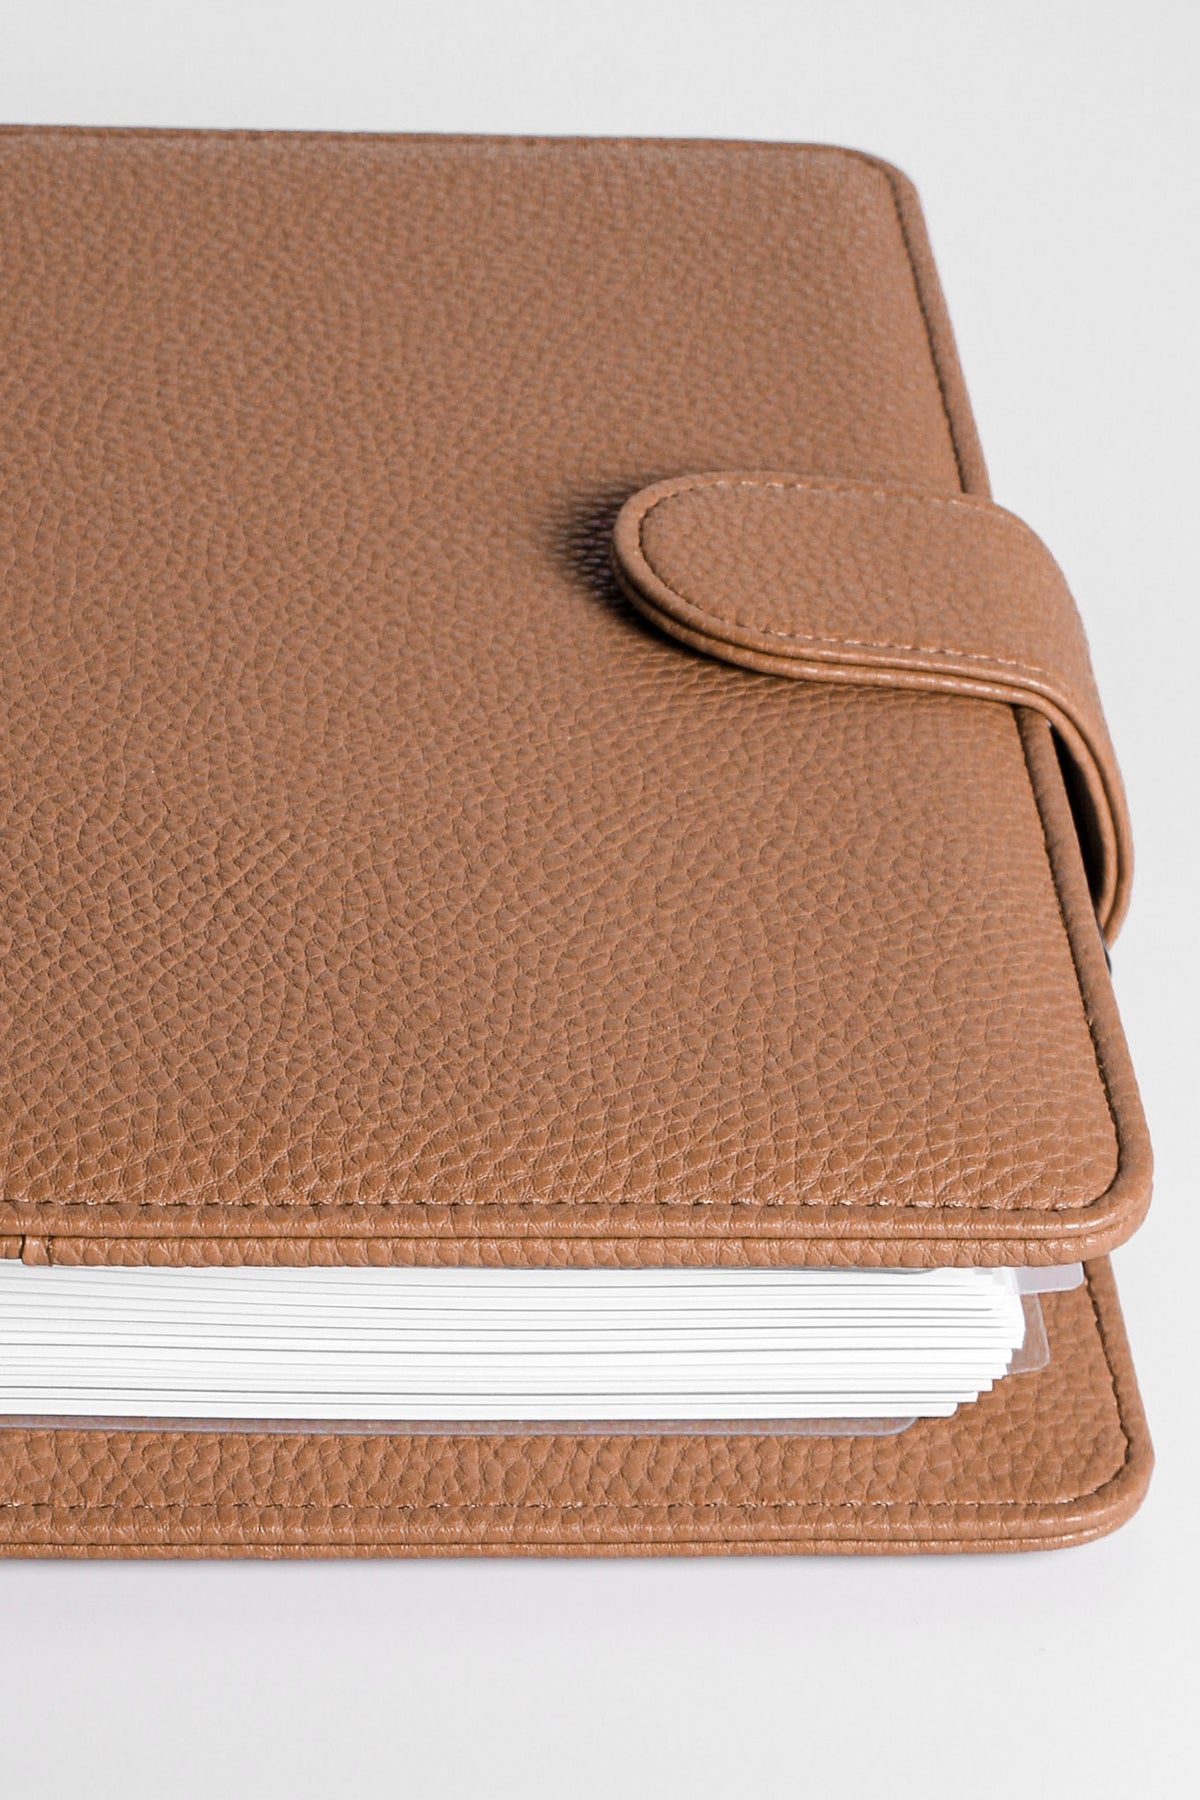 Agenda Cover | Small | Contoured Leather